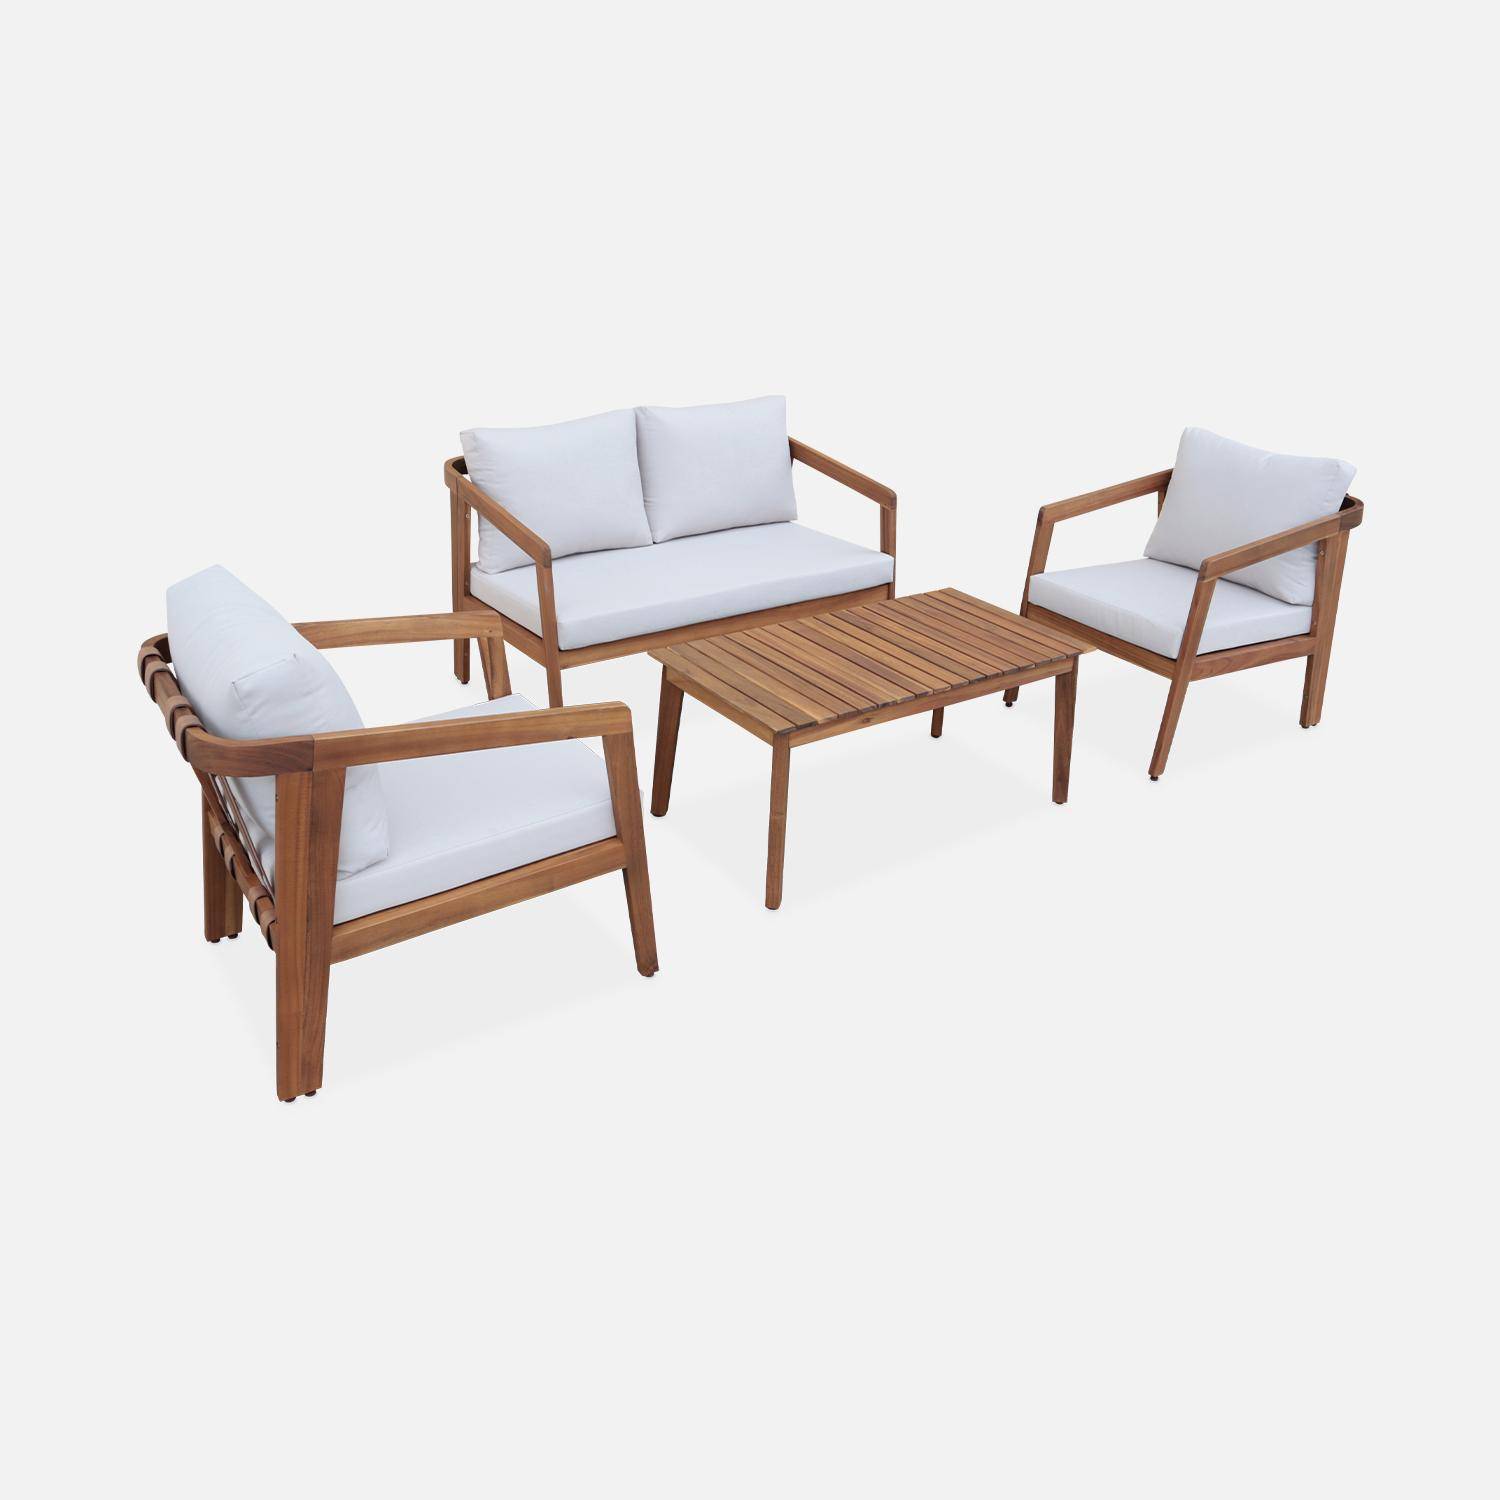 4-seater wooden garden sofa set, beige, natural acacia, 108.5 x 74.7 x 64.5cm Photo3